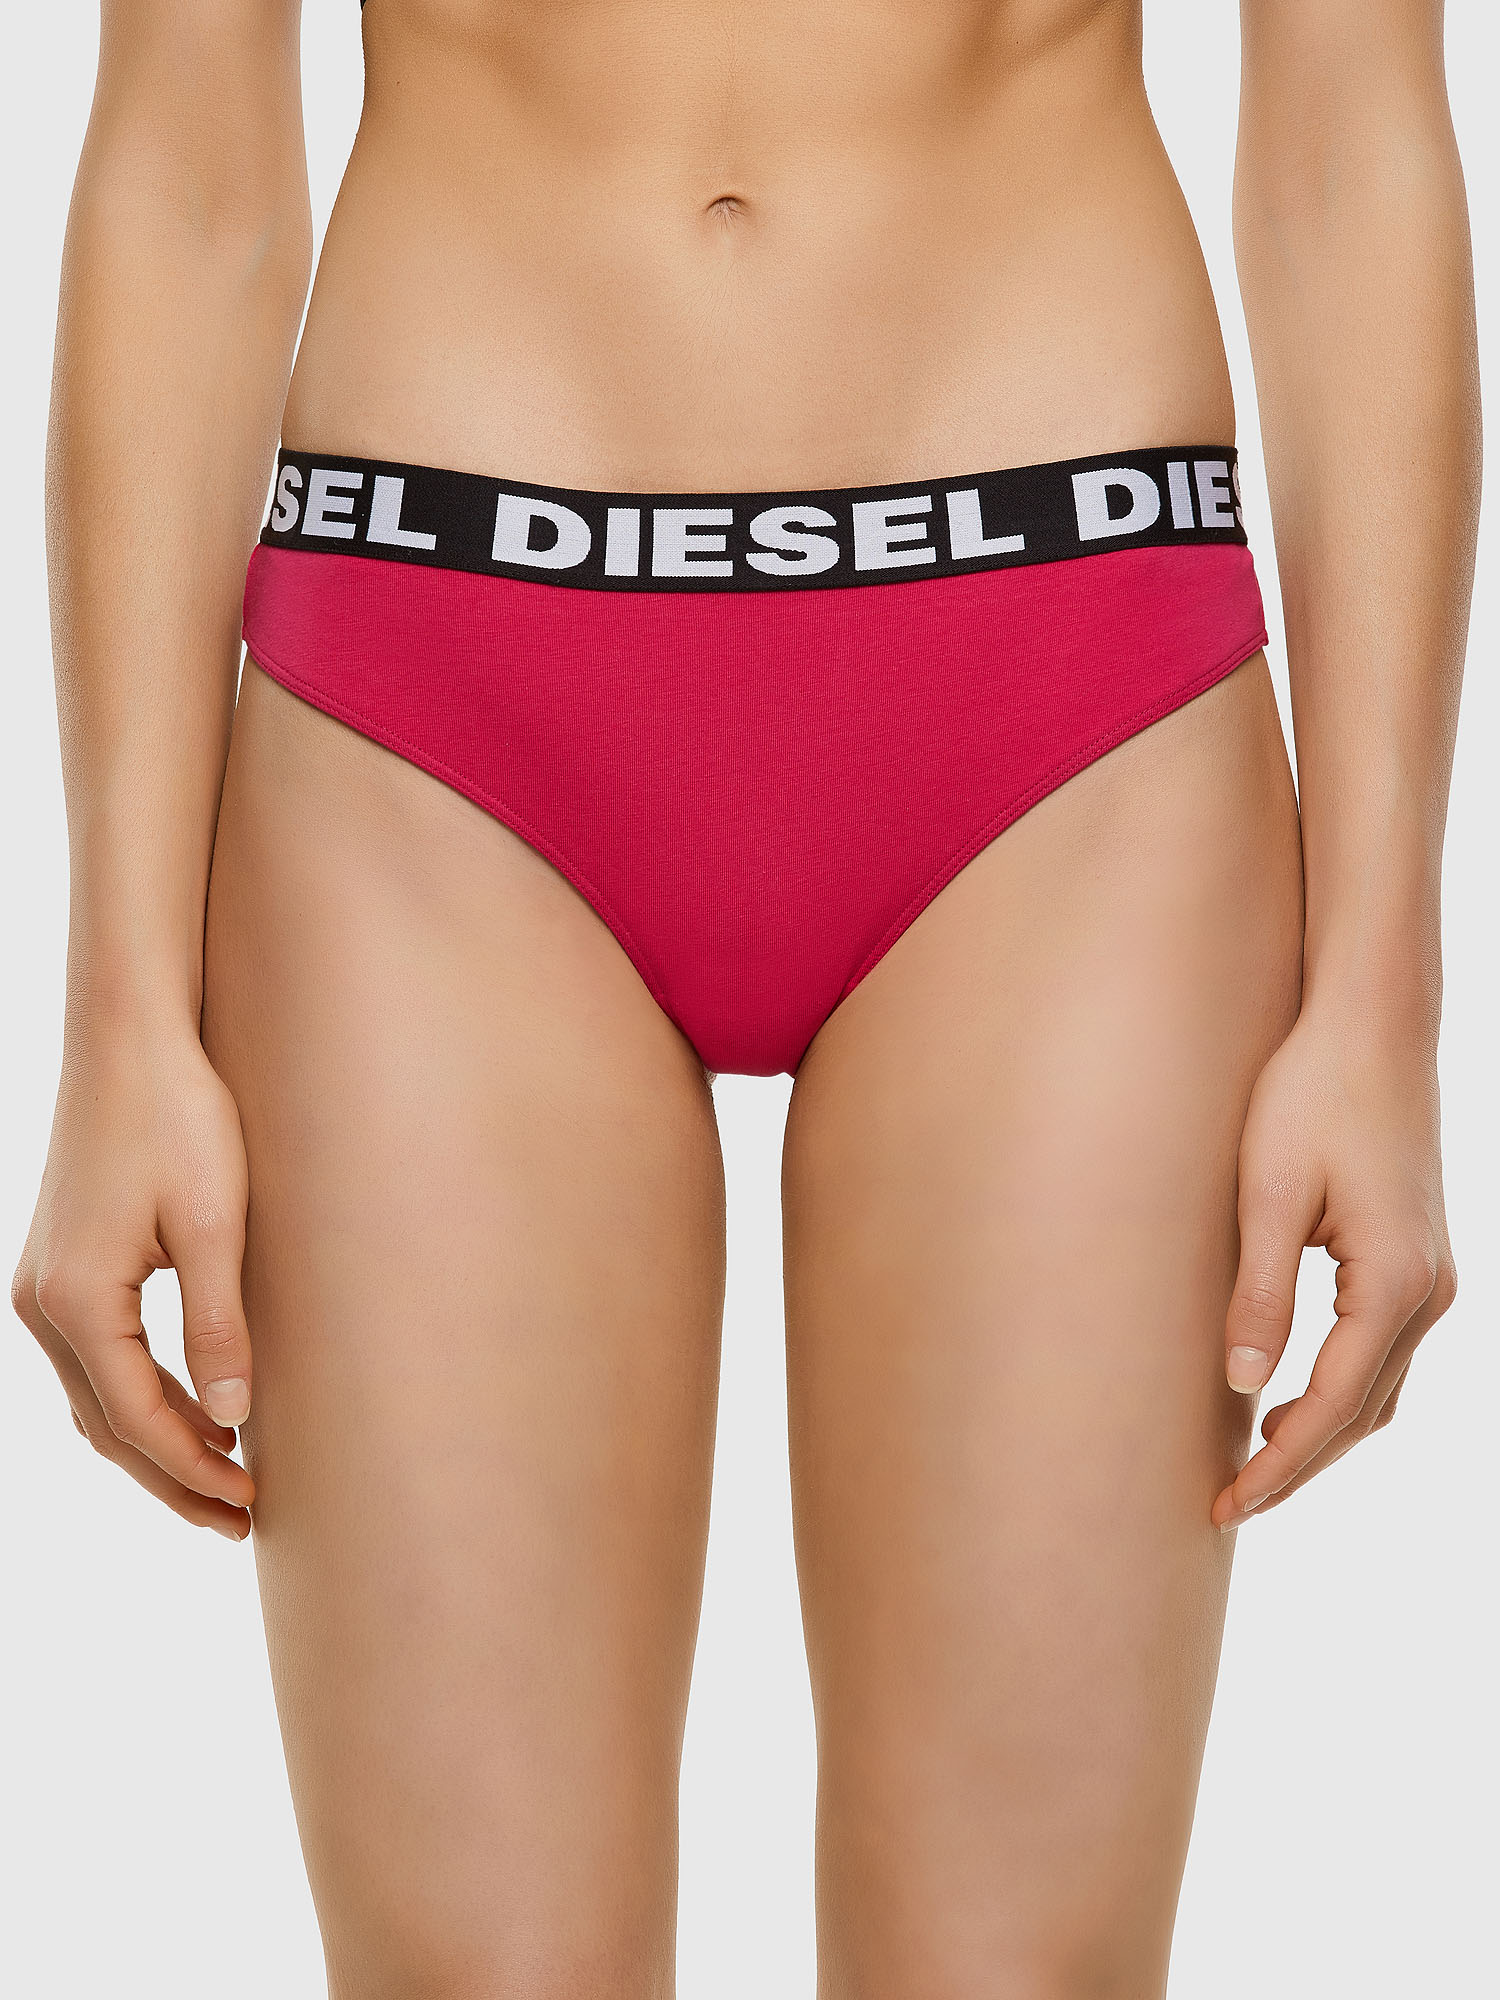 Diesel - UFPN-ALLY, Hot pink - Image 1